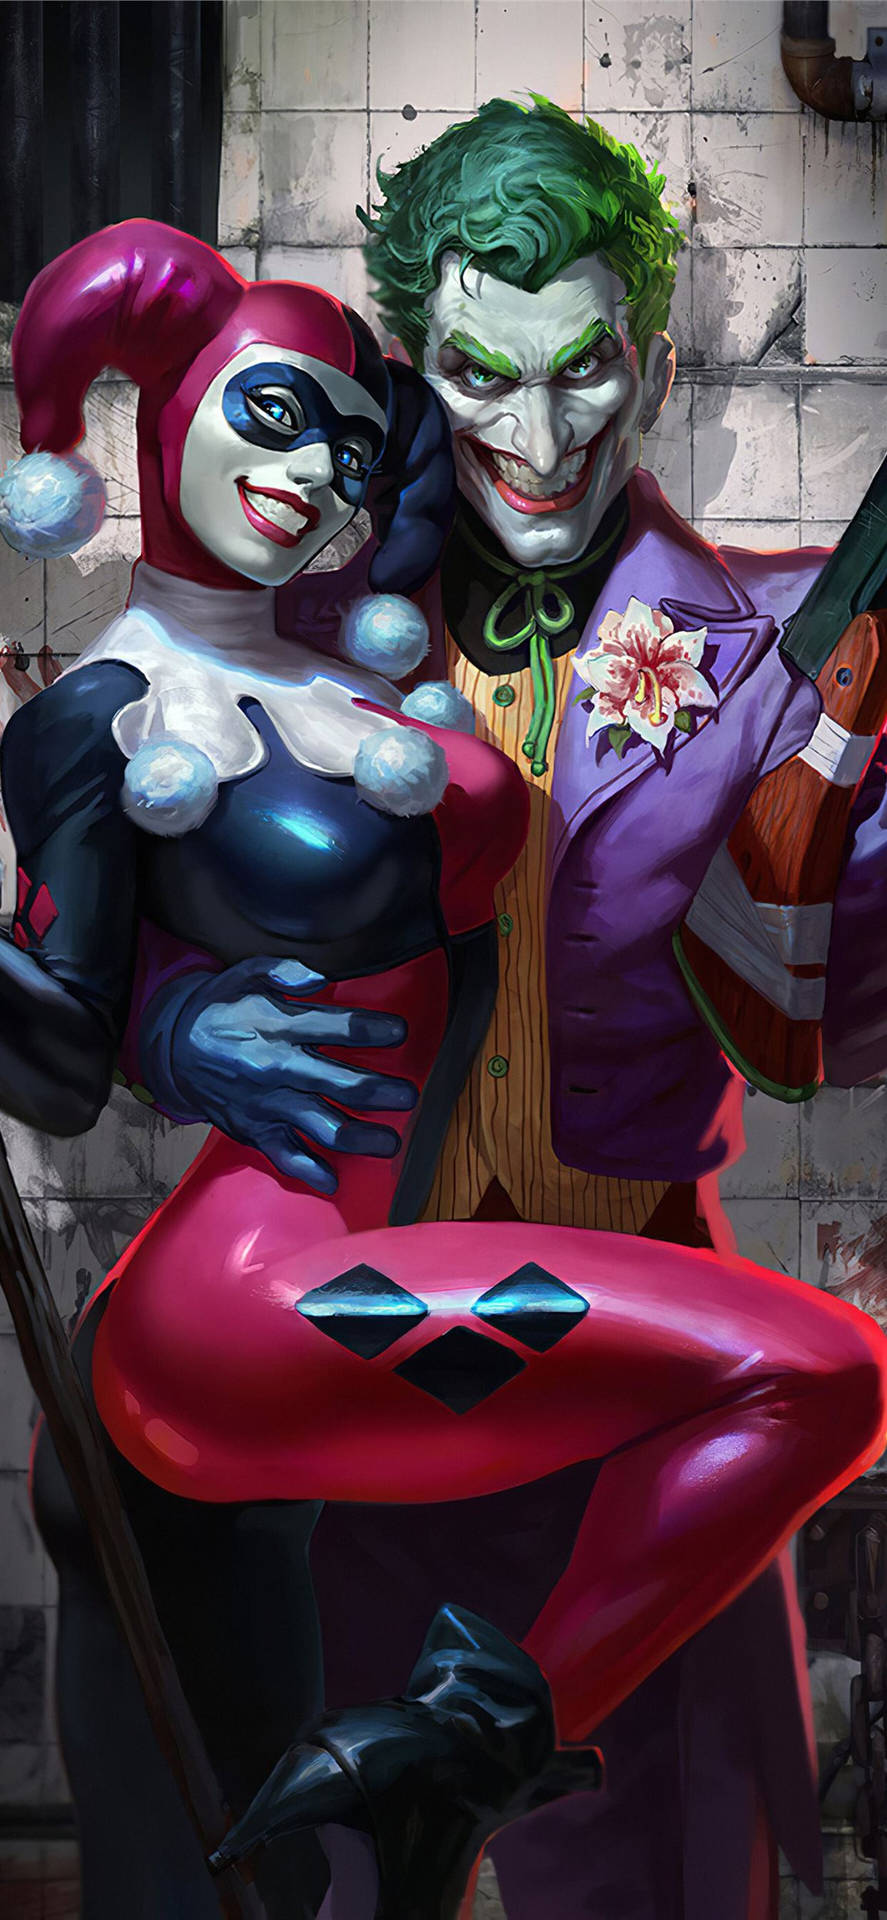 Fondode Pantalla Sonriente Del Joker Y Harley Quinn Para Teléfono. Fondo de pantalla